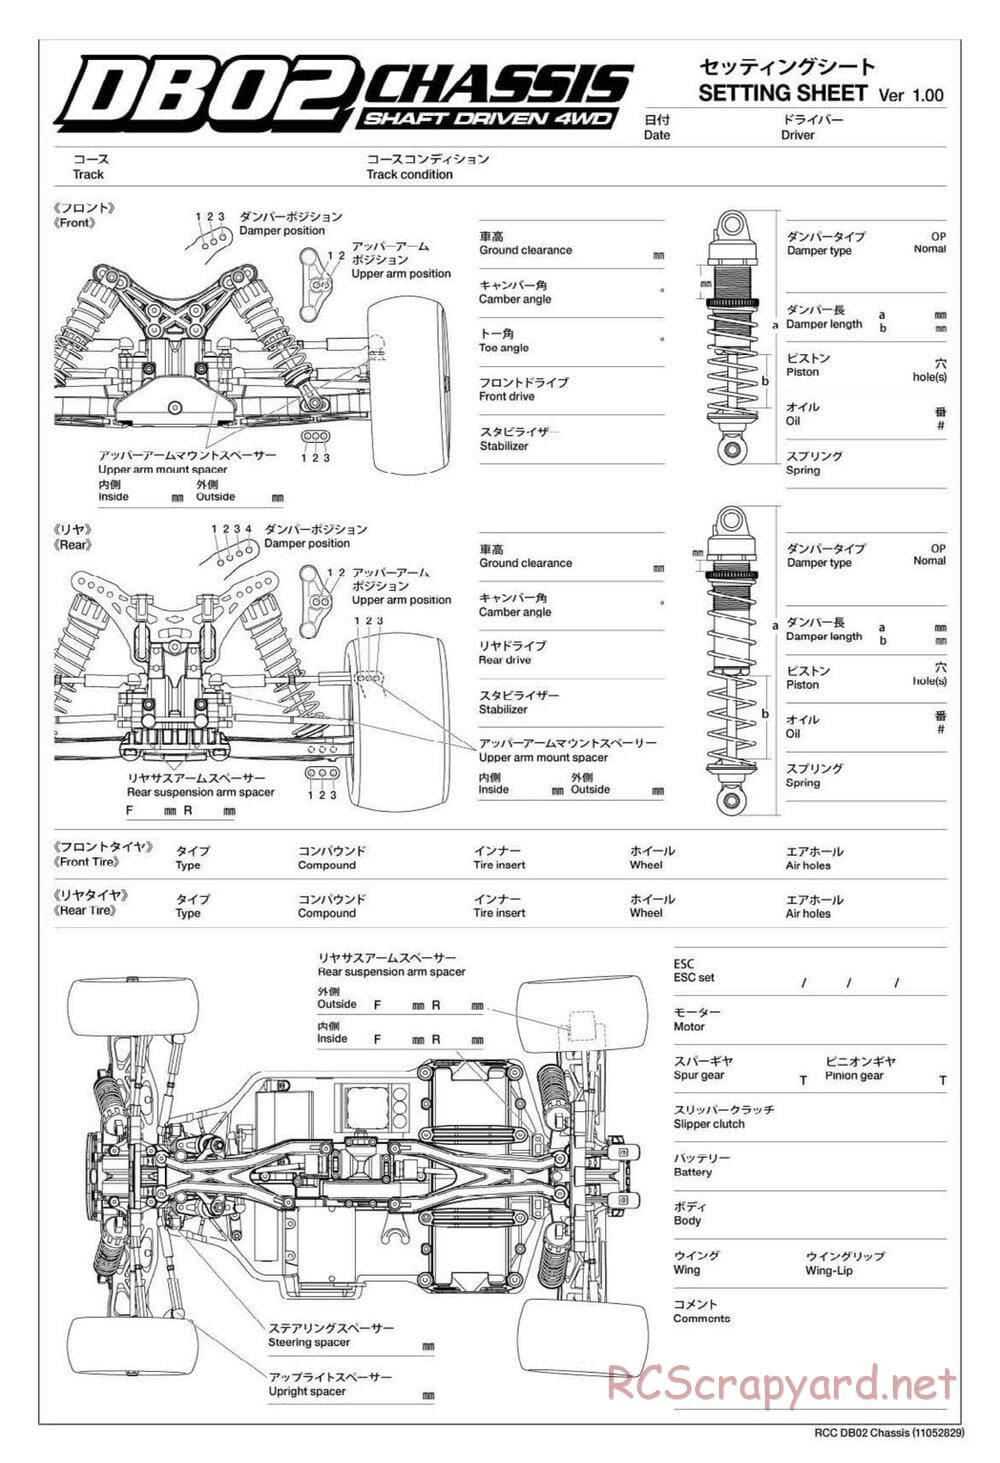 Tamiya - Leonis - DB-02 Chassis - Manual - Page 22